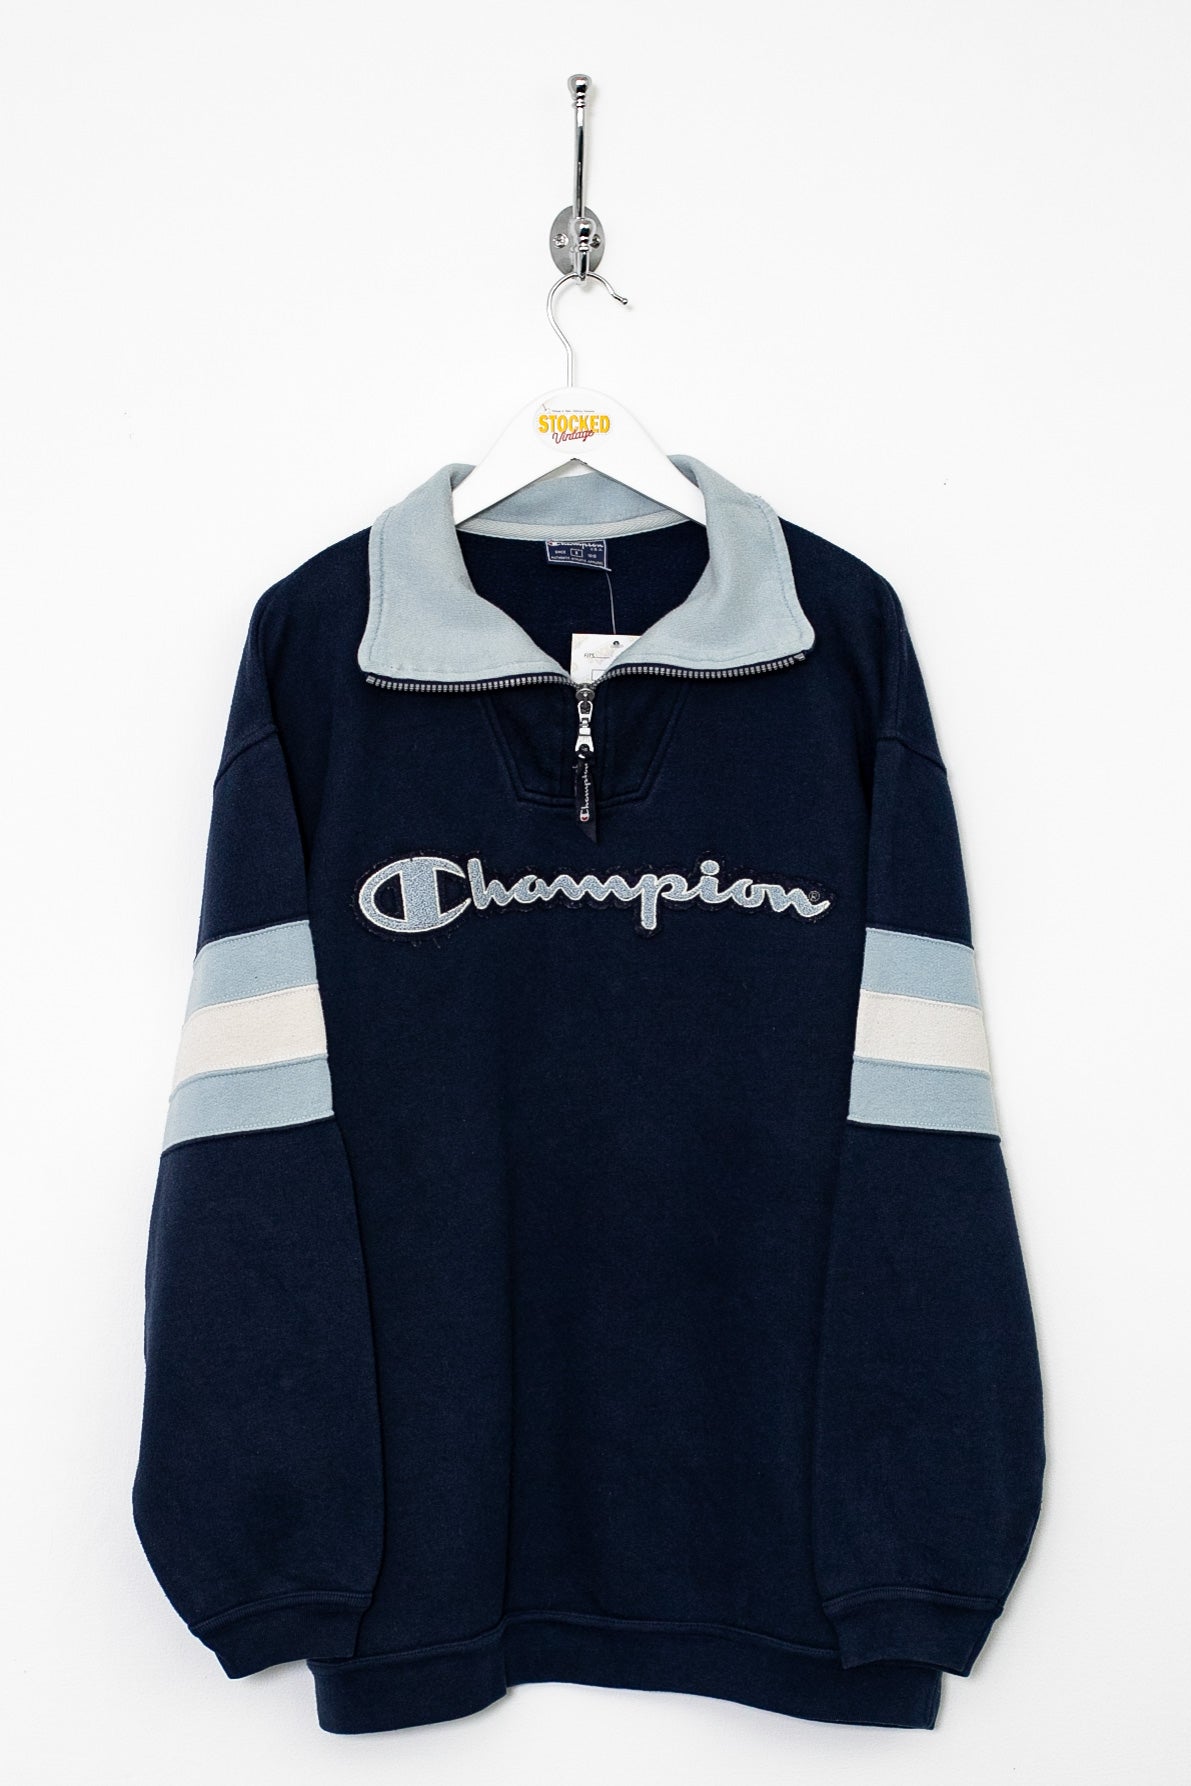 1/4 00s – Stocked Champion Vintage Sweatshirt Zip (S)